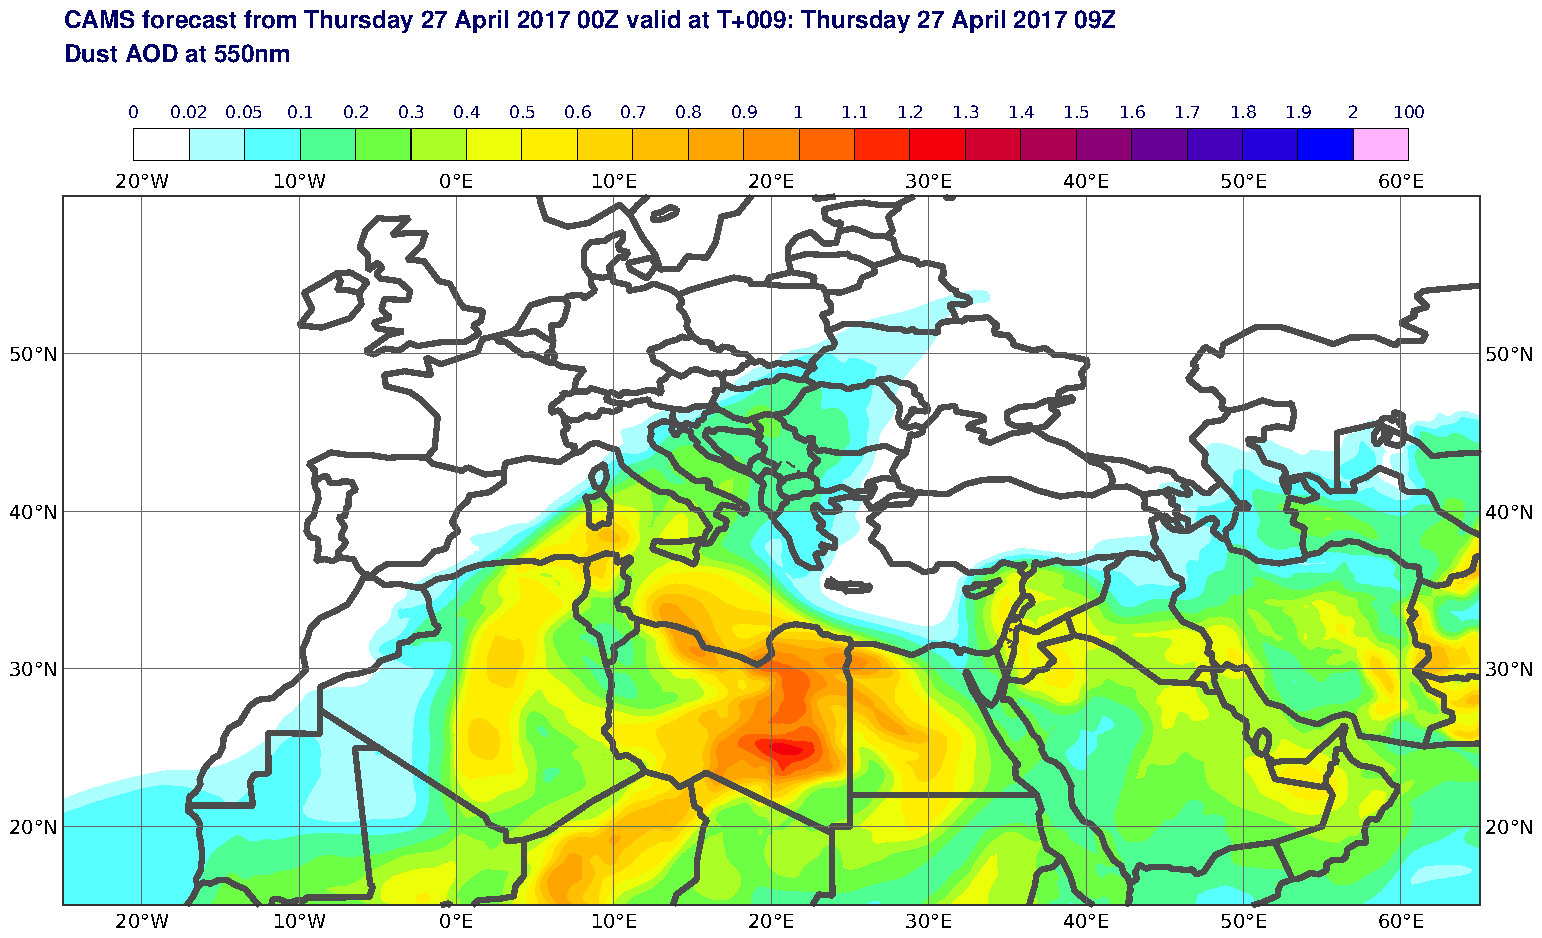 Dust AOD at 550nm valid at T9 - 2017-04-27 09:00